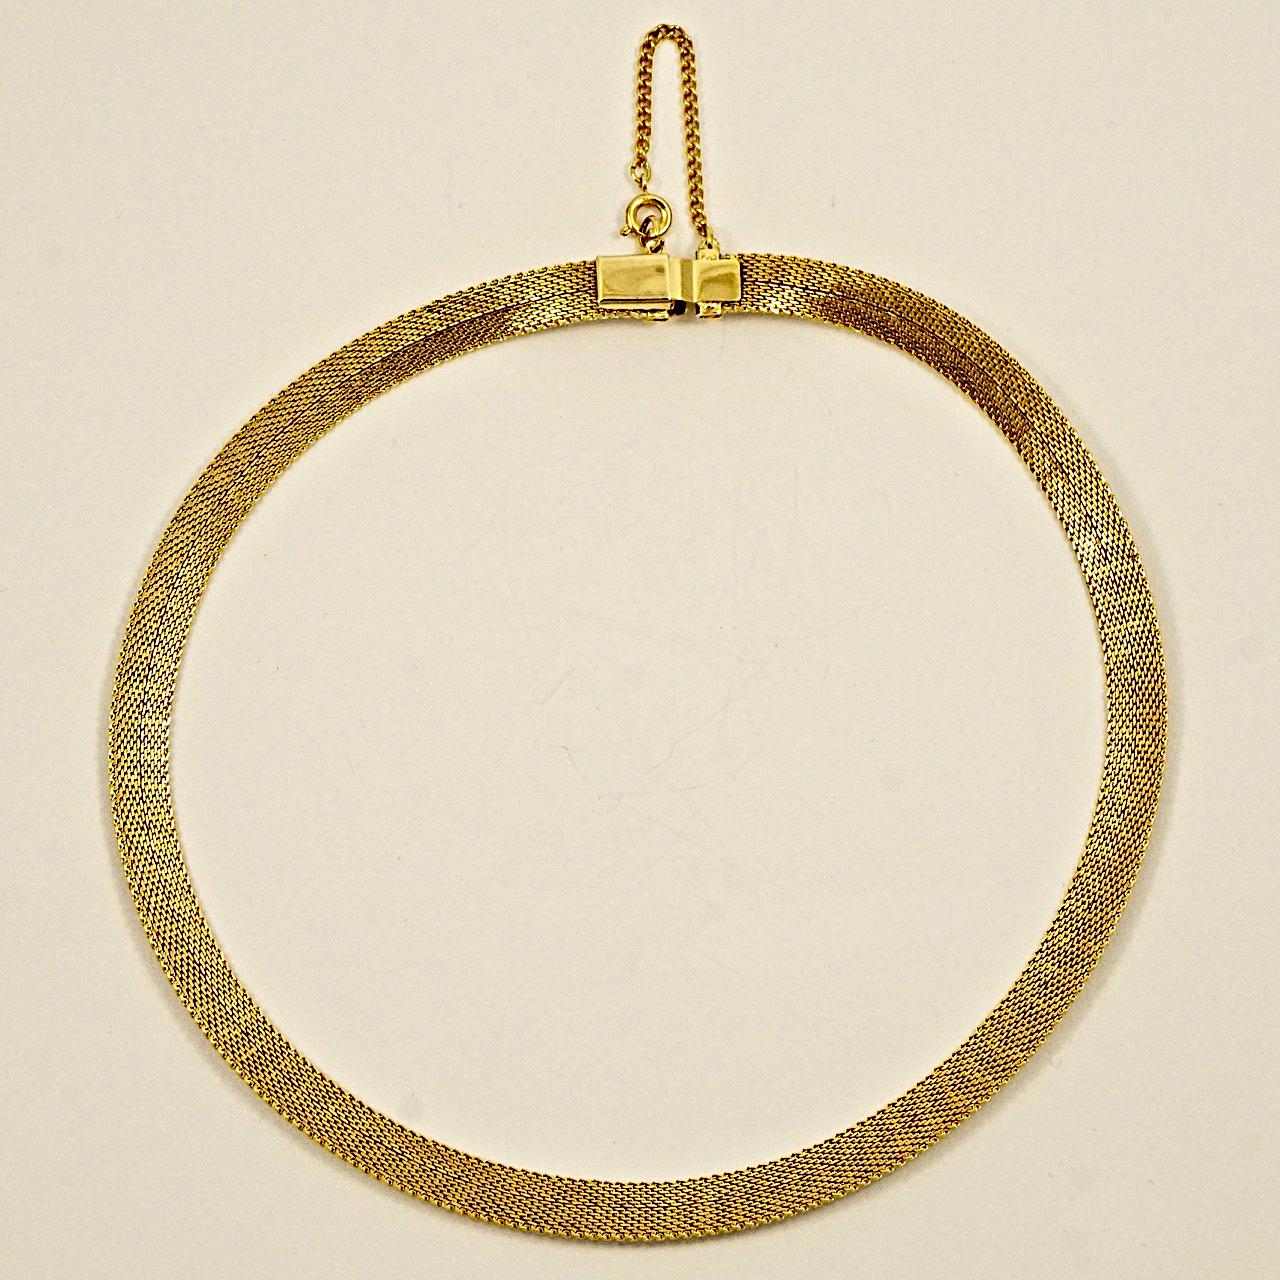 Gold Plated Textured Design Mesh Collar Necklace circa 1980s 1